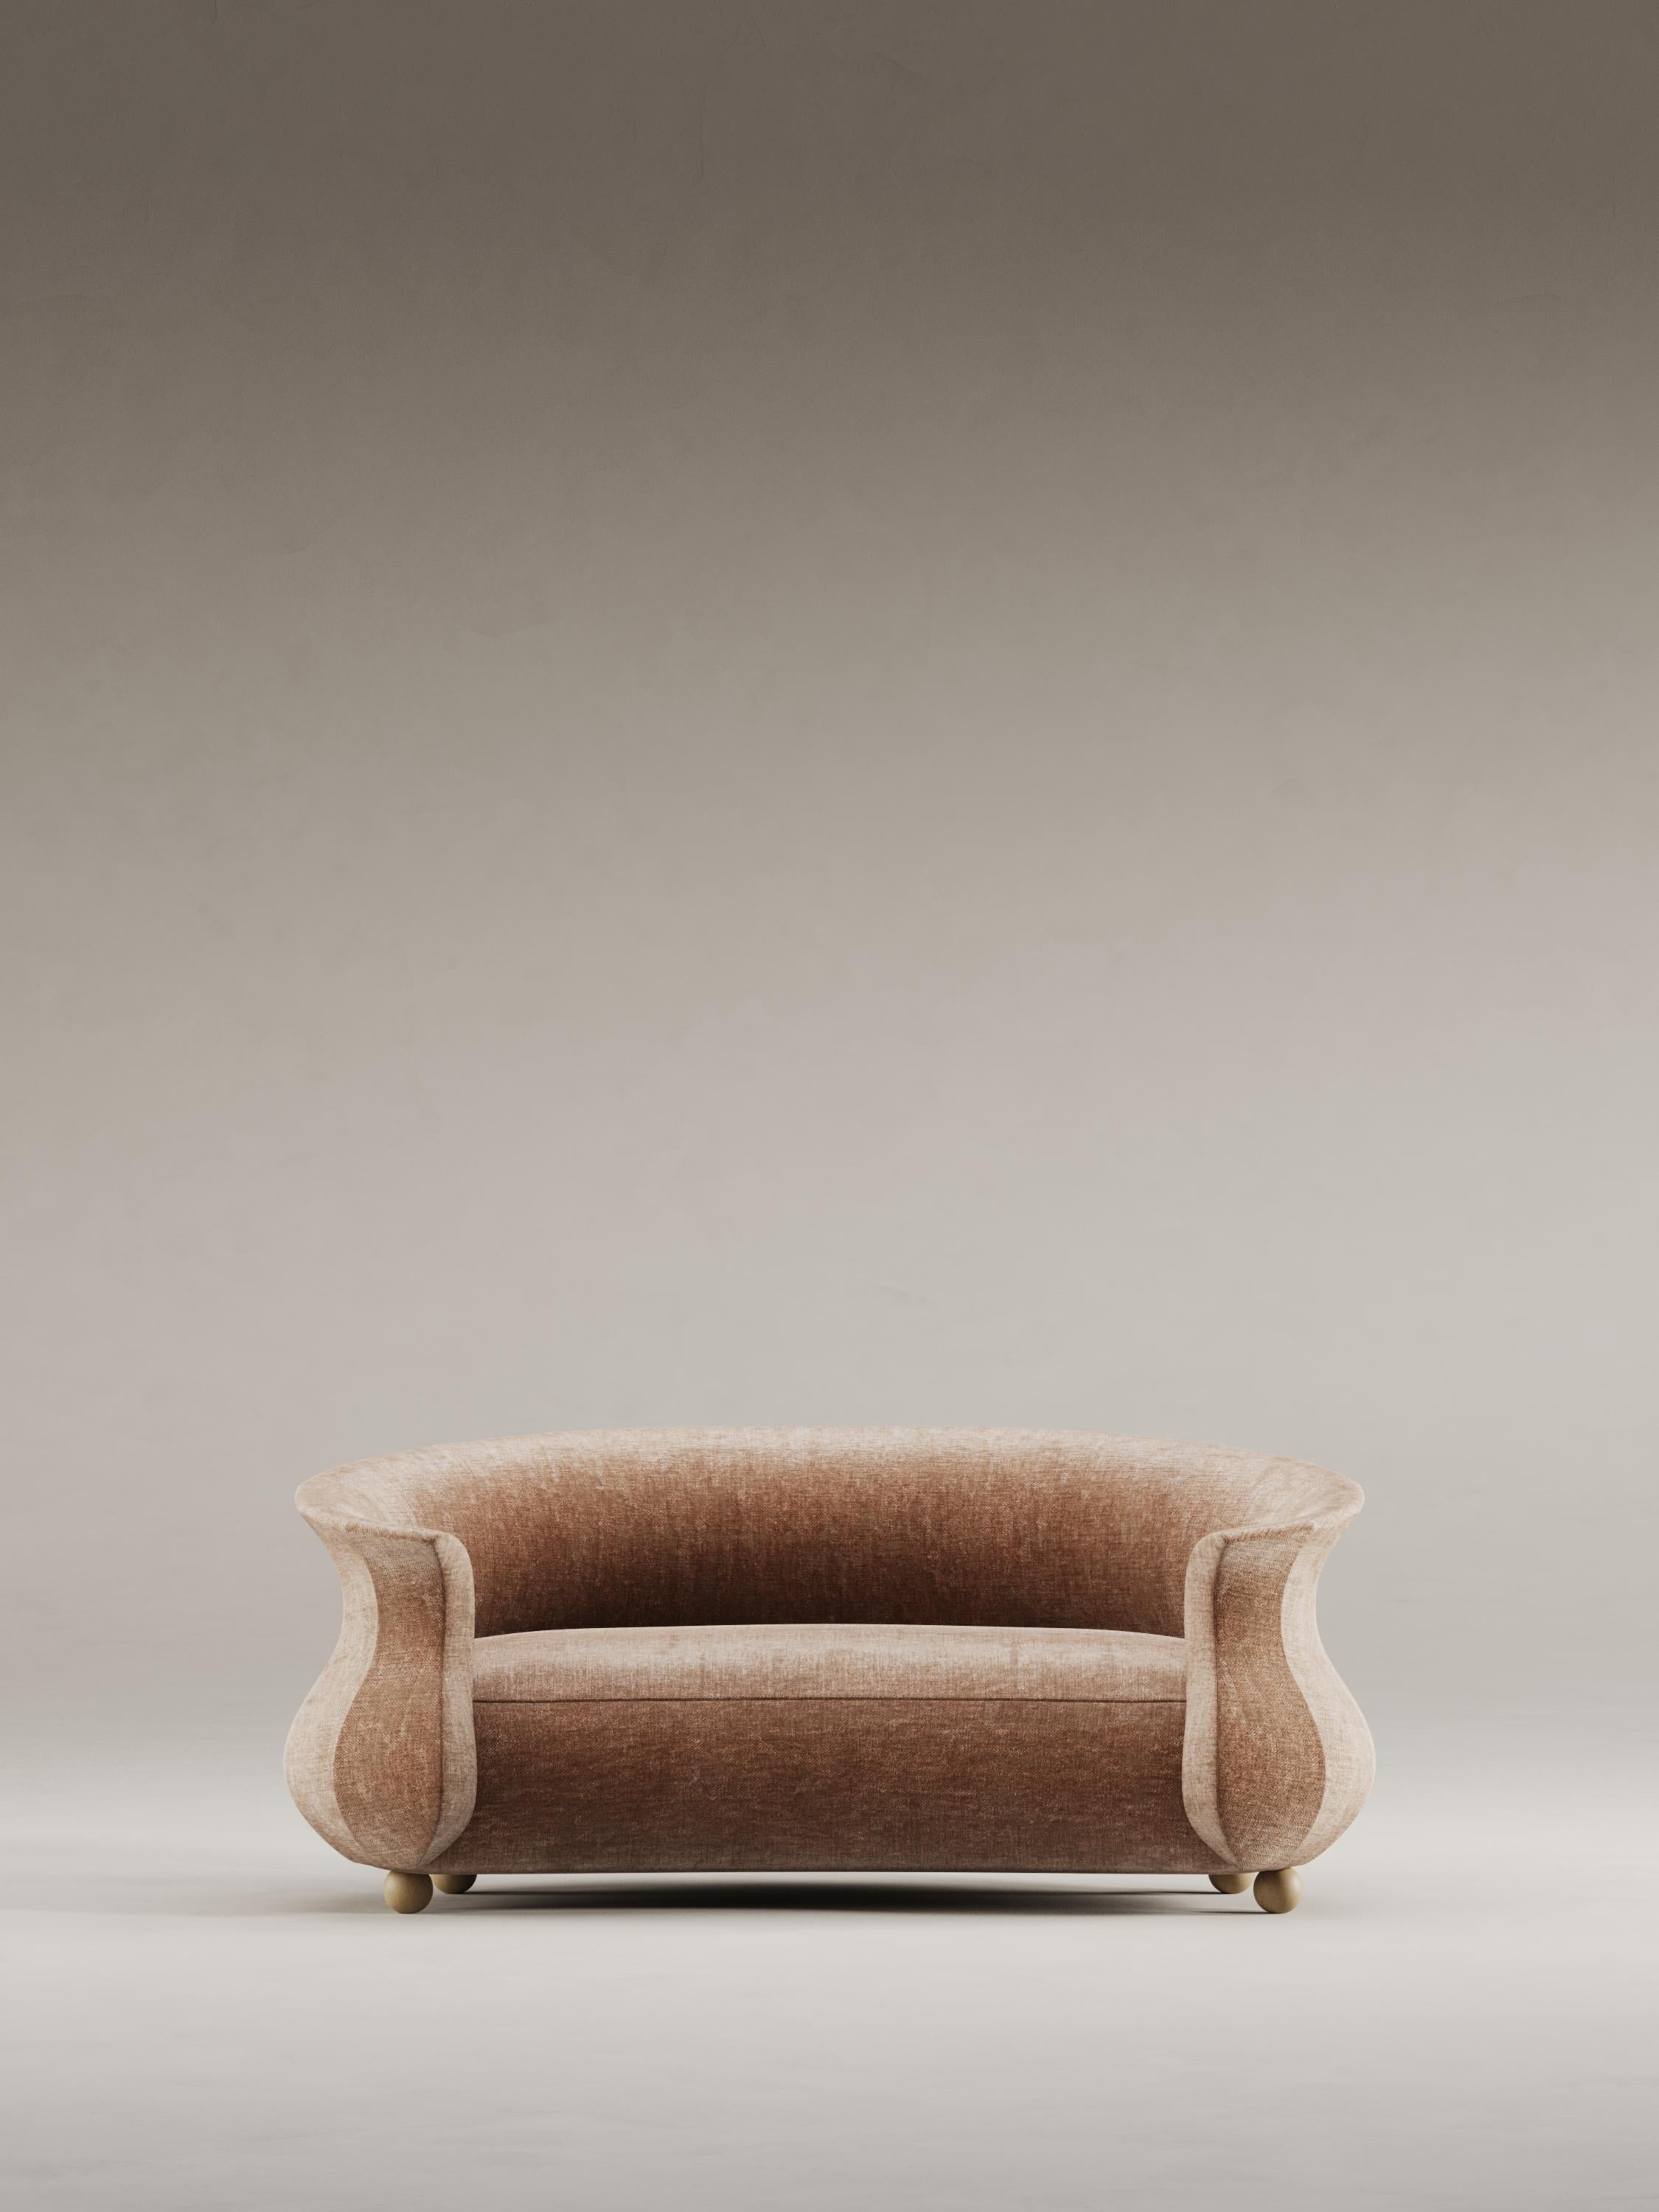 Handmade  Contemporary Sculptural design Amphora Sofa In New Condition For Sale In London, GB